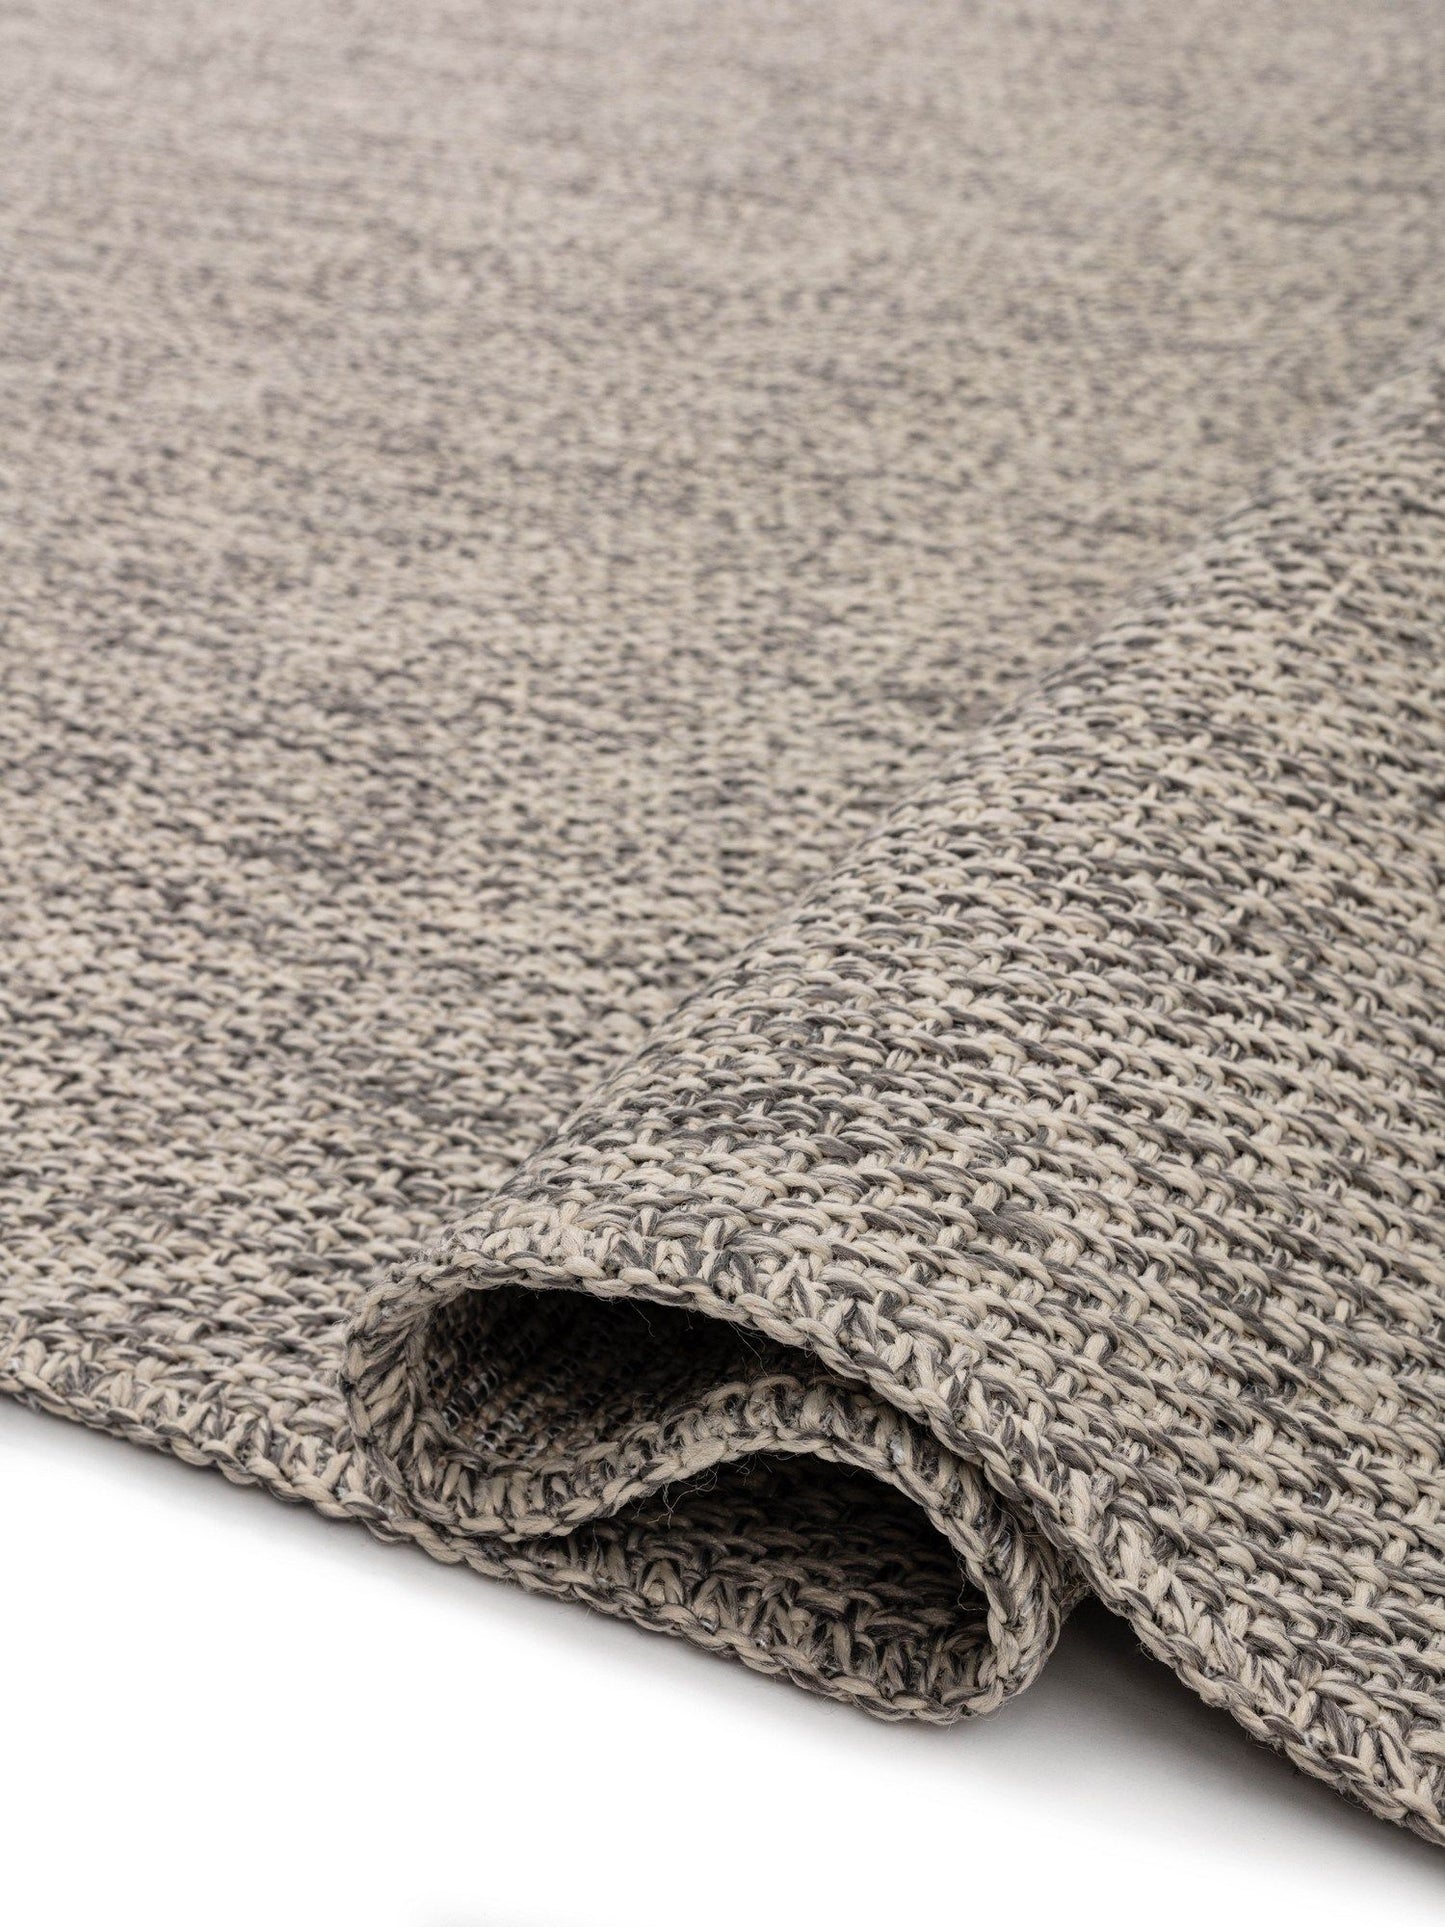 0602 Jut - Grey - Carpet (80 x 150)